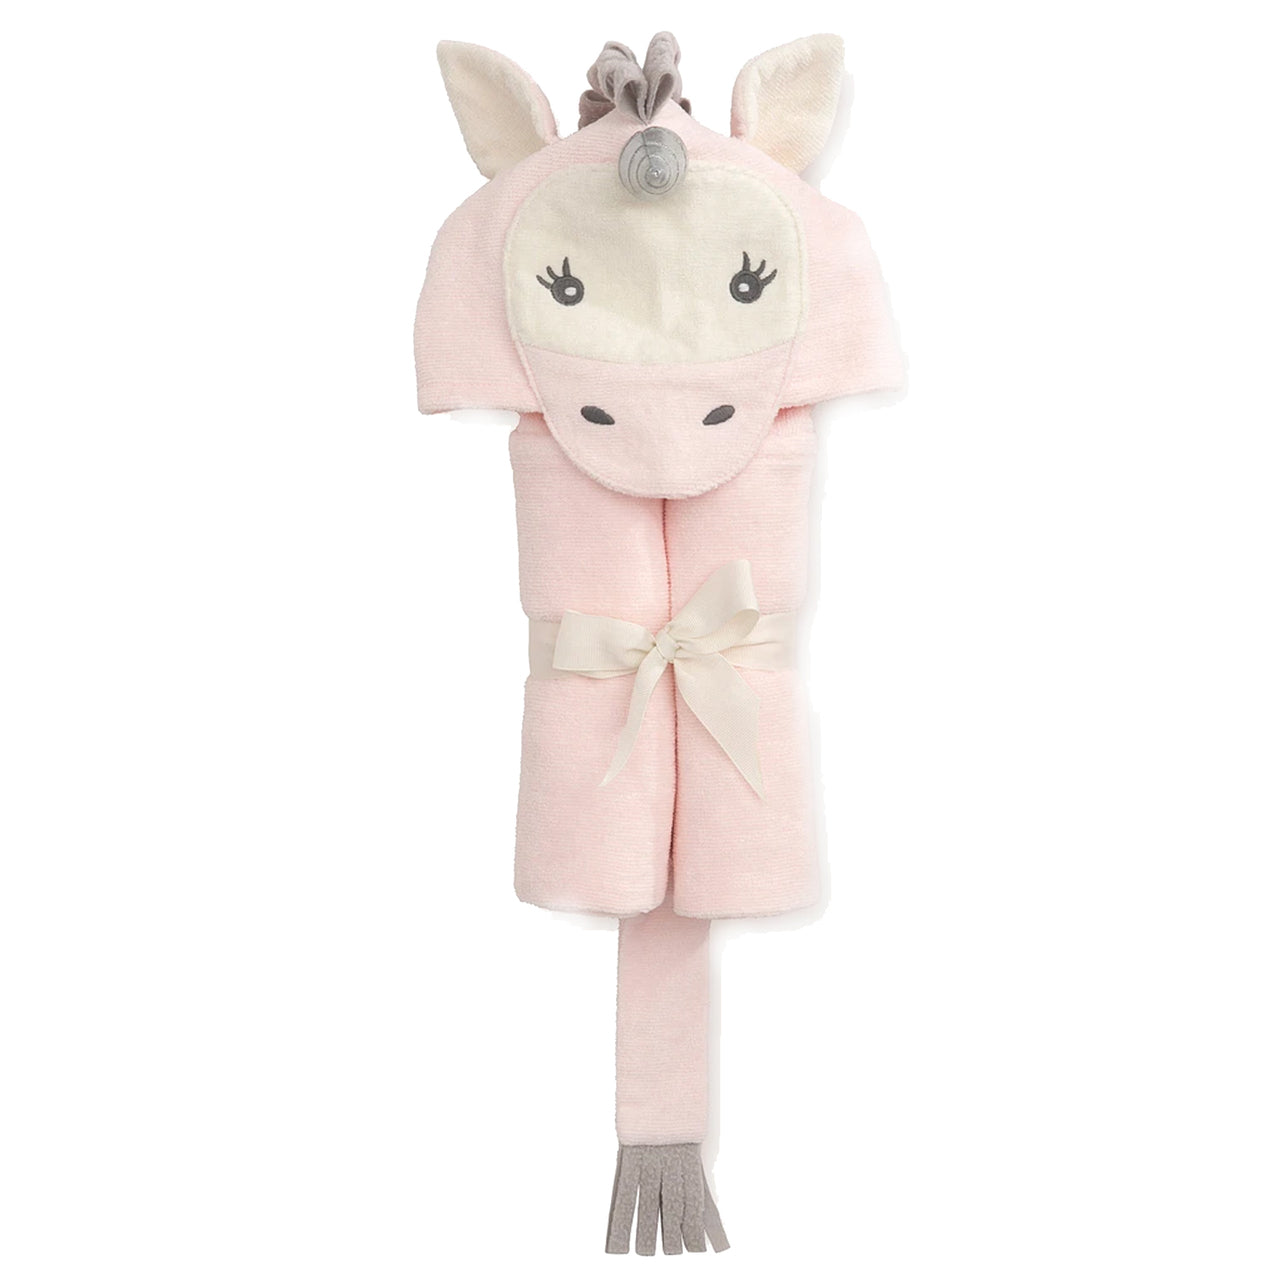 SpearmintLOVE’s baby Pink Unicorn Hooded Bath Towel